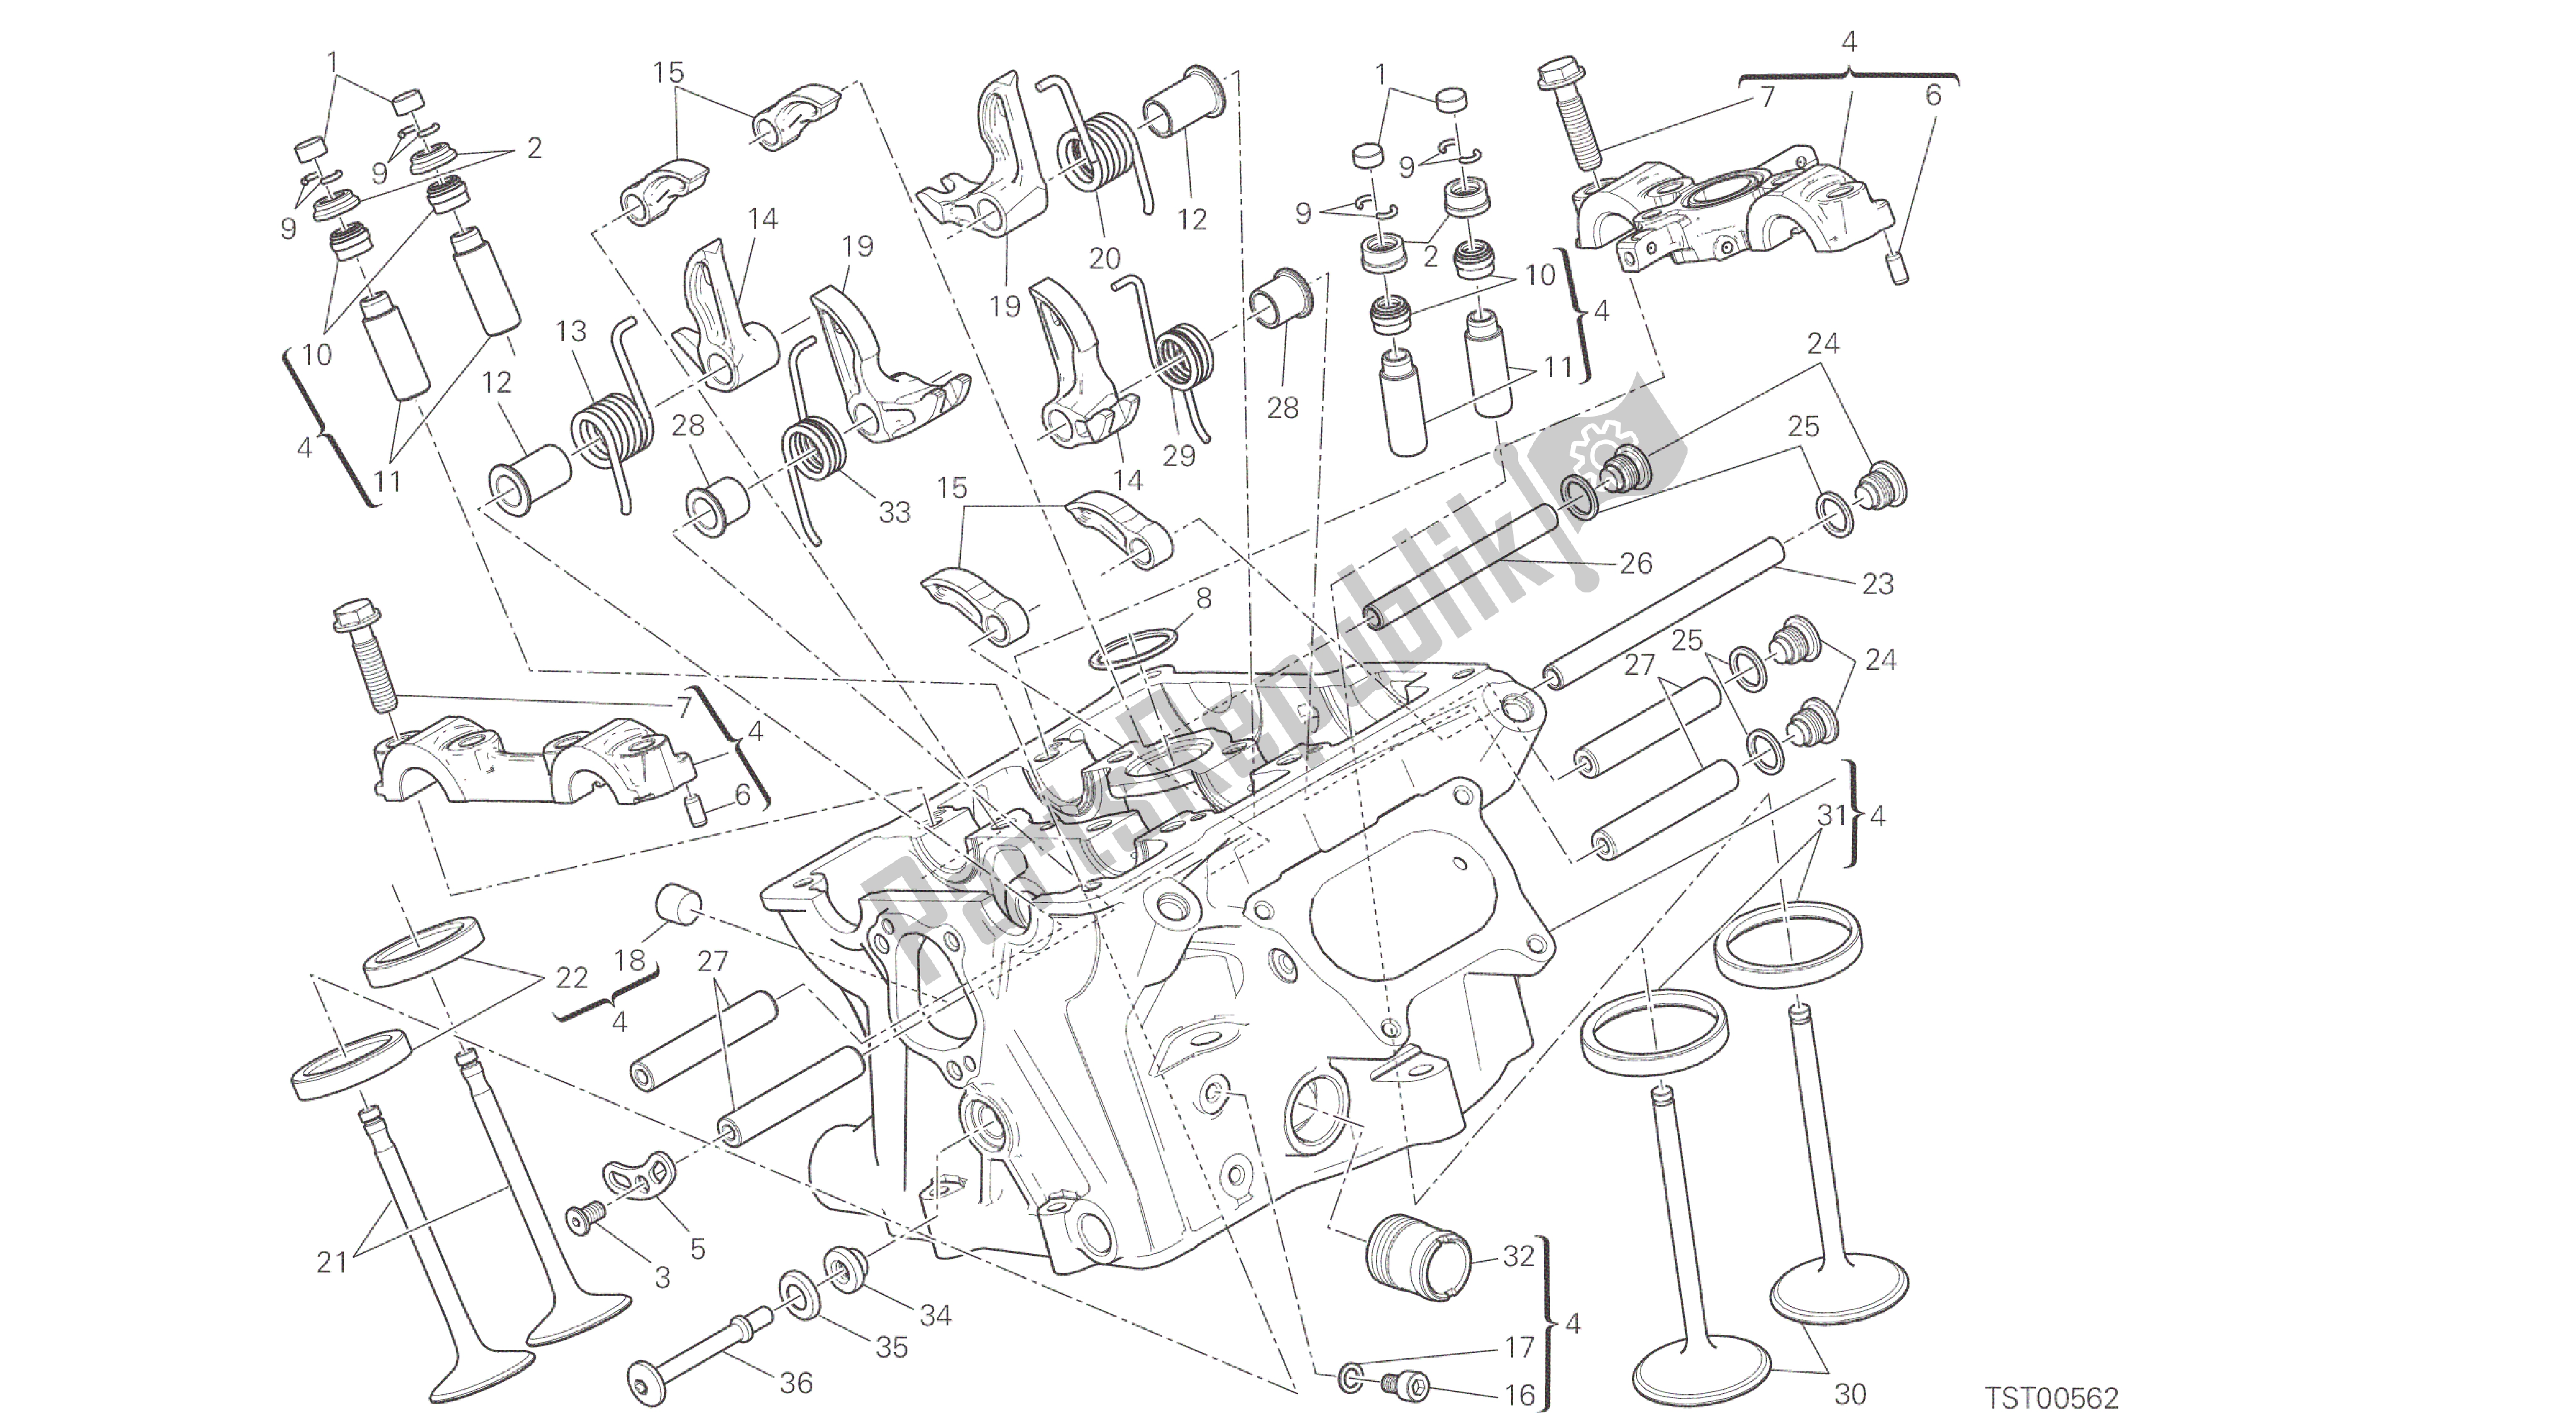 Todas las partes para Dibujo 015 - Motor De Grupo De Cabezal Vertical [mod: 959,959 Aws] de Ducati Panigale 959 2016